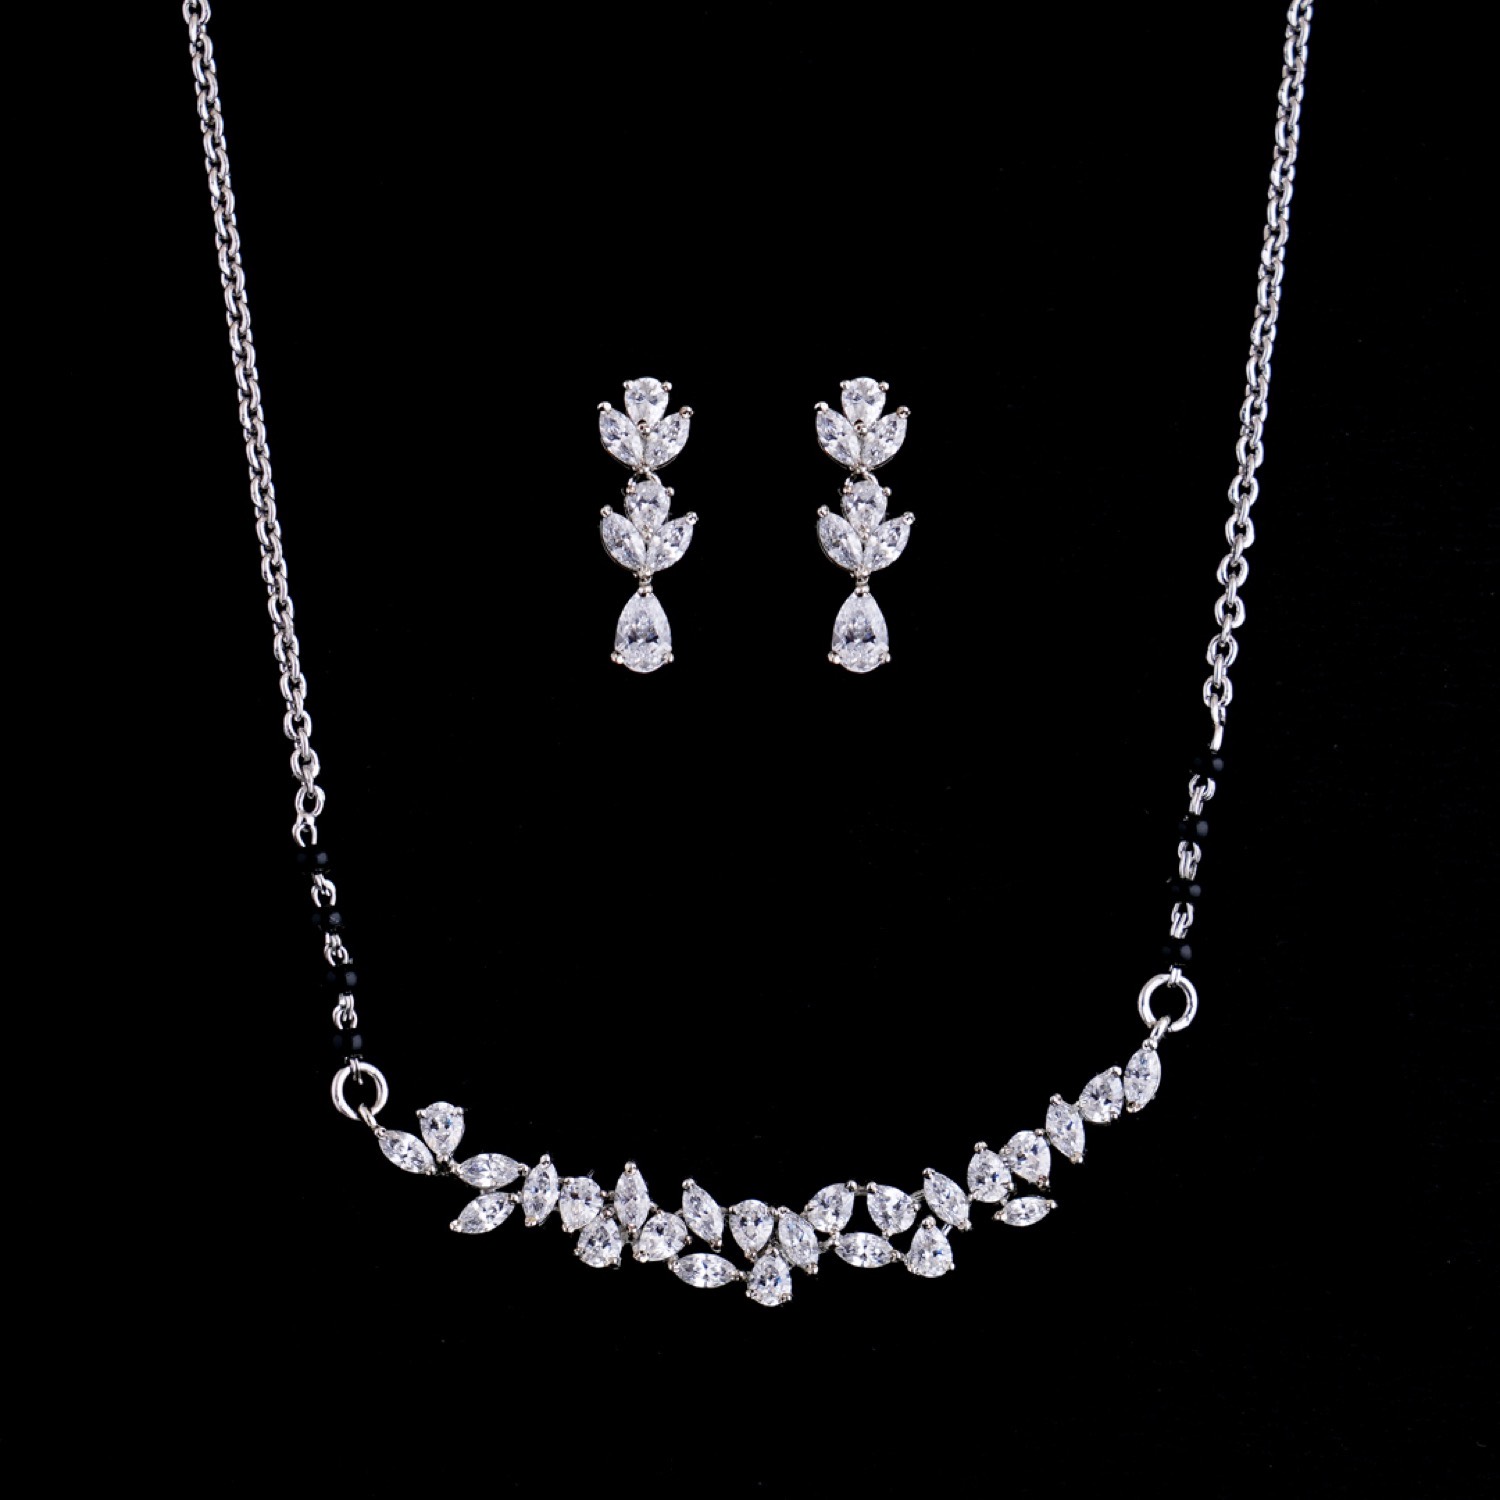 varam_swarovski_white_stone_leaf_design_silver_chain_with_earrings_1-1